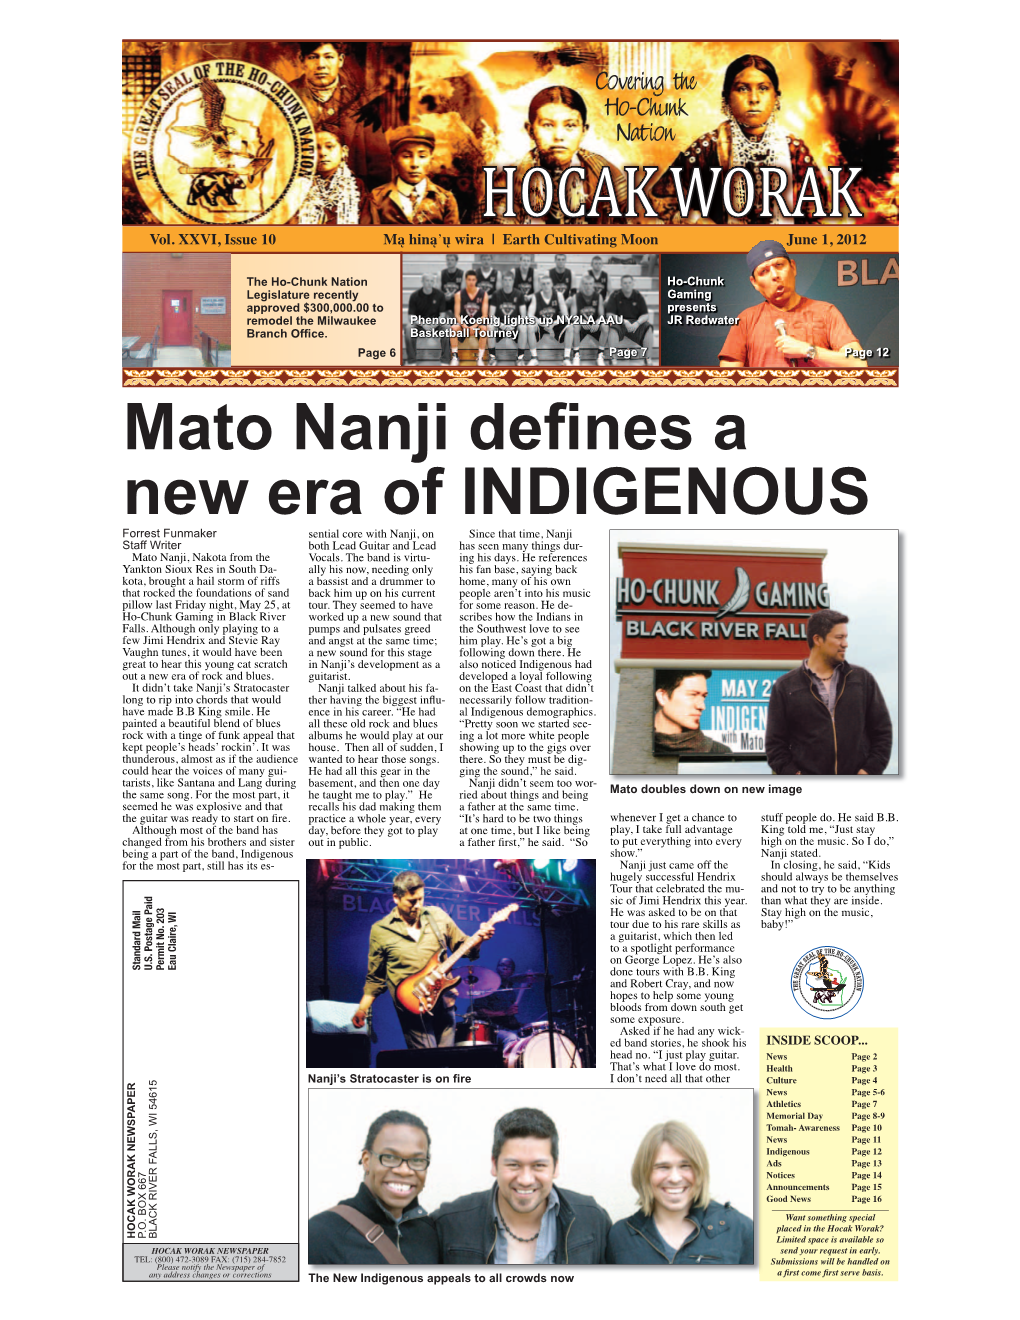 Mato Nanji Defines a New Era of INDIGENOUS